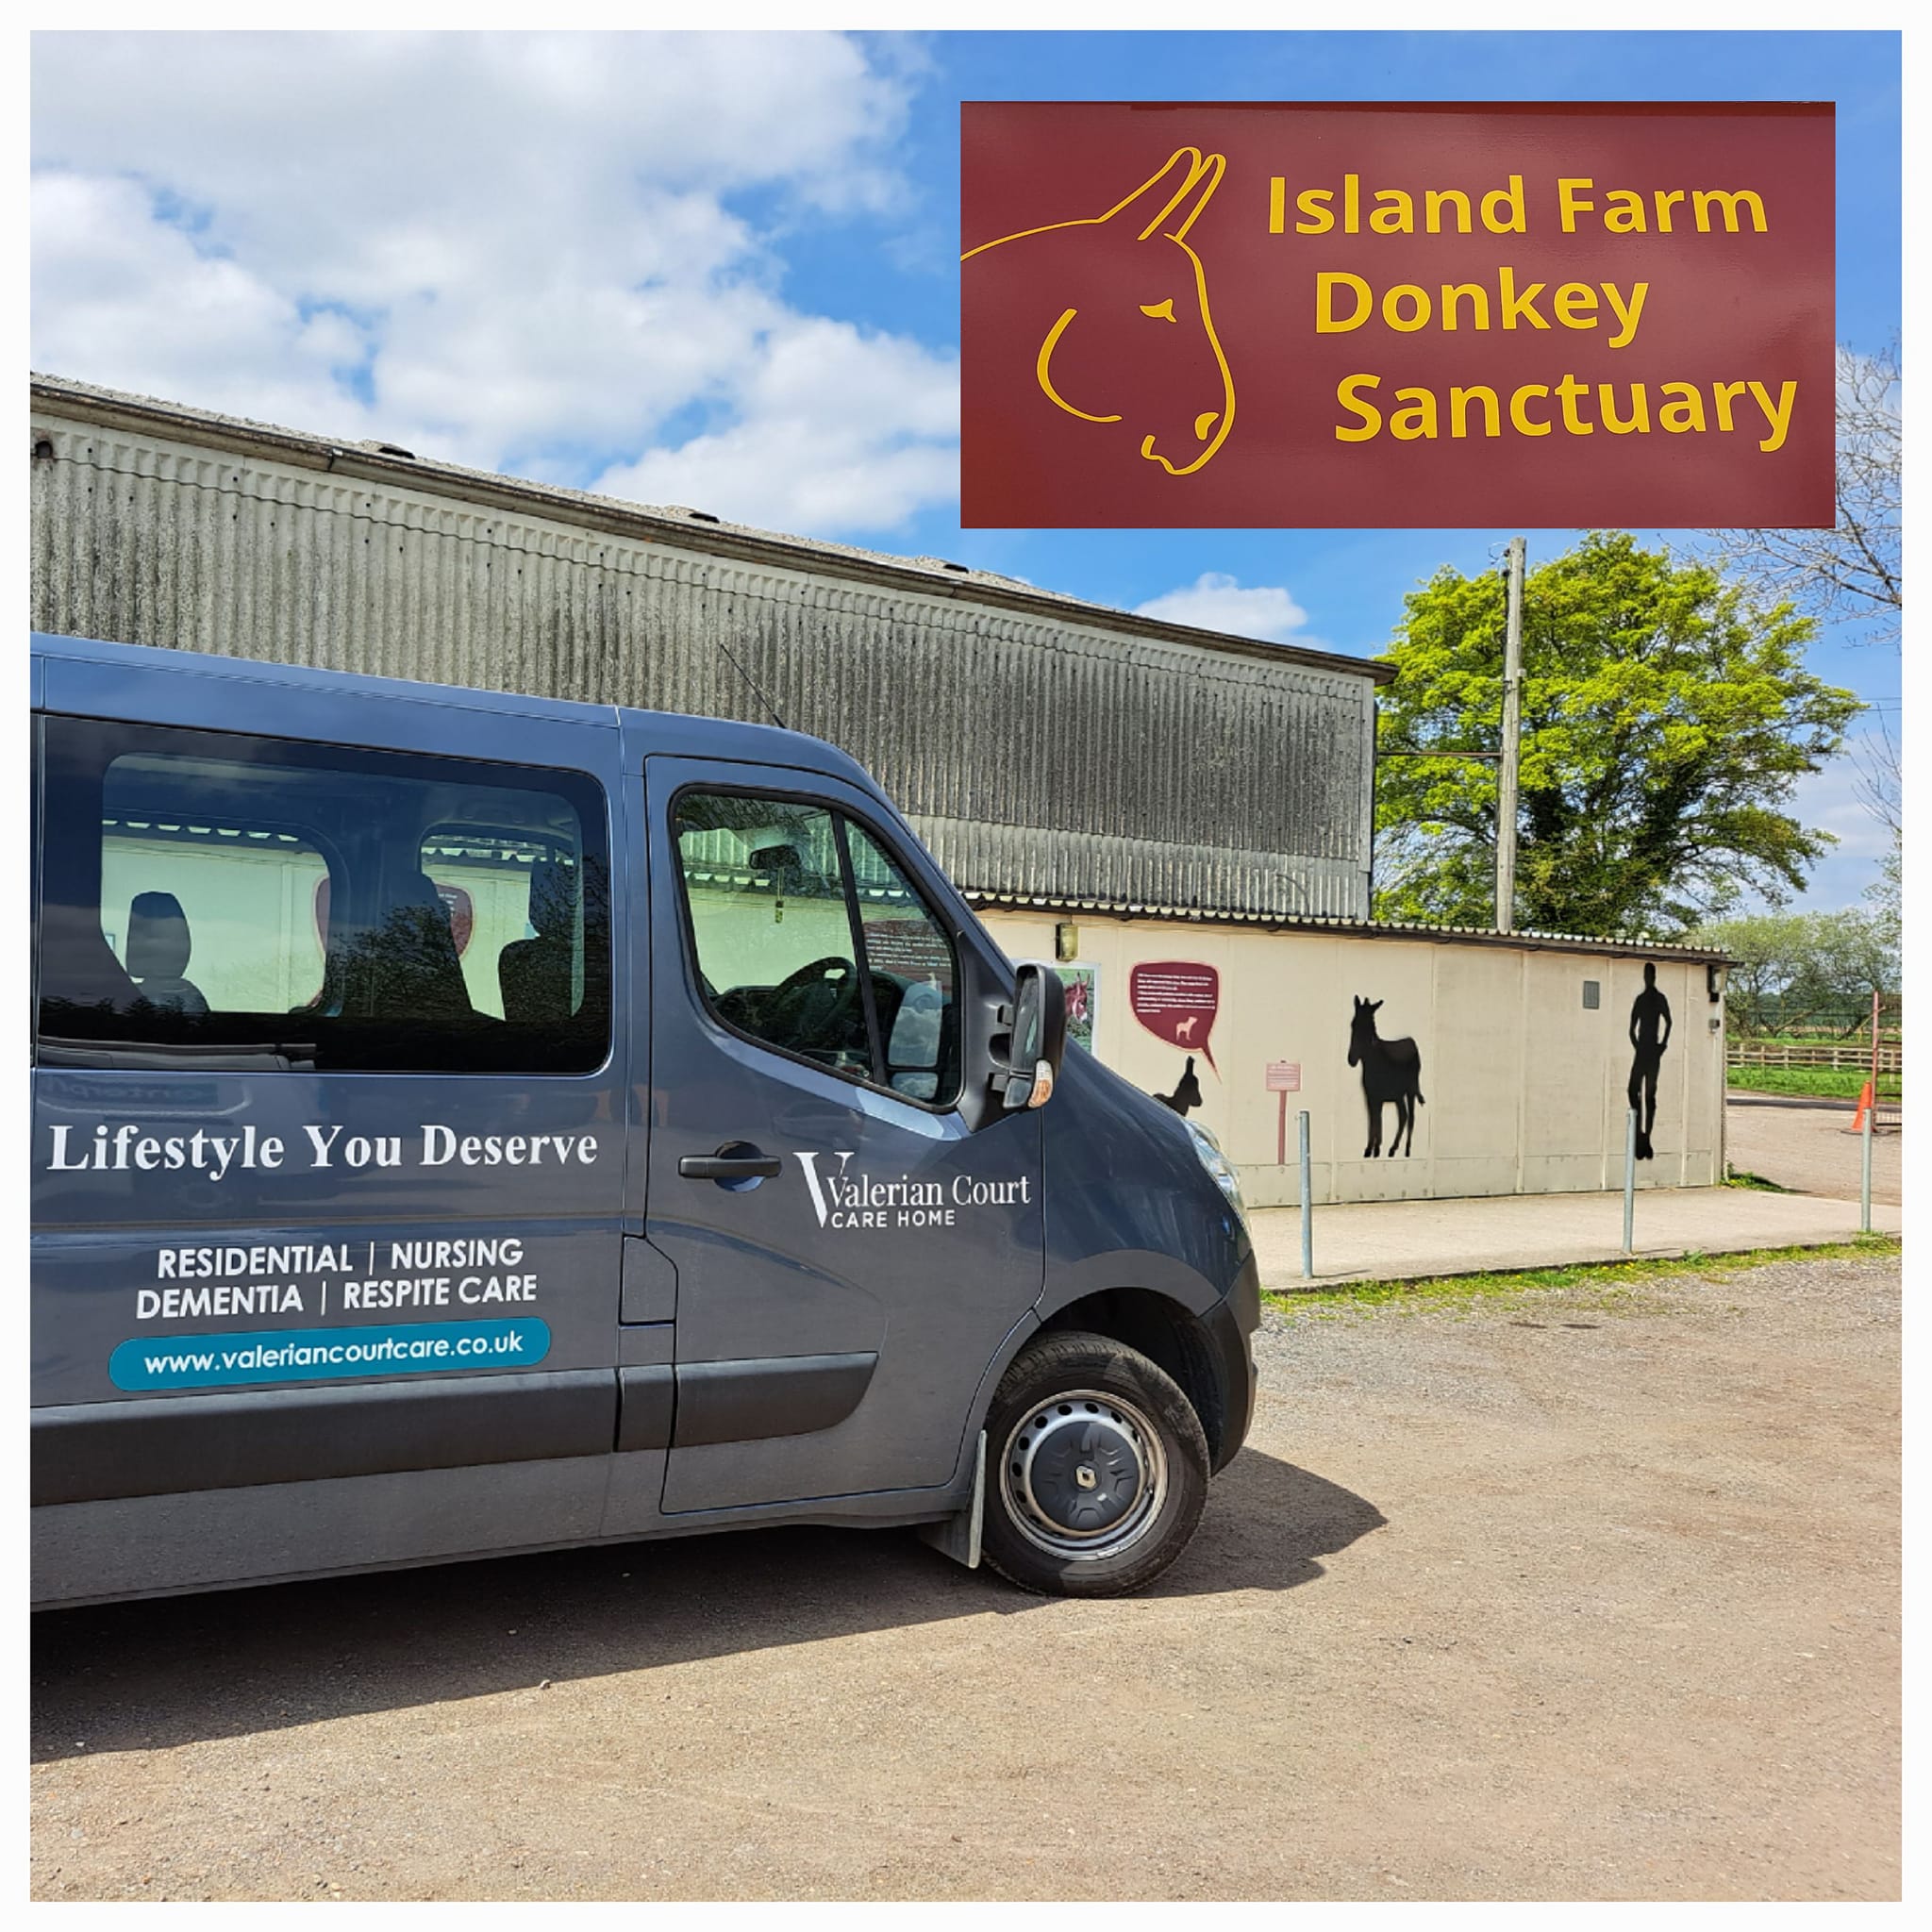 Valerian Court mini van outside the Island Farm Donkey Sanctuary.